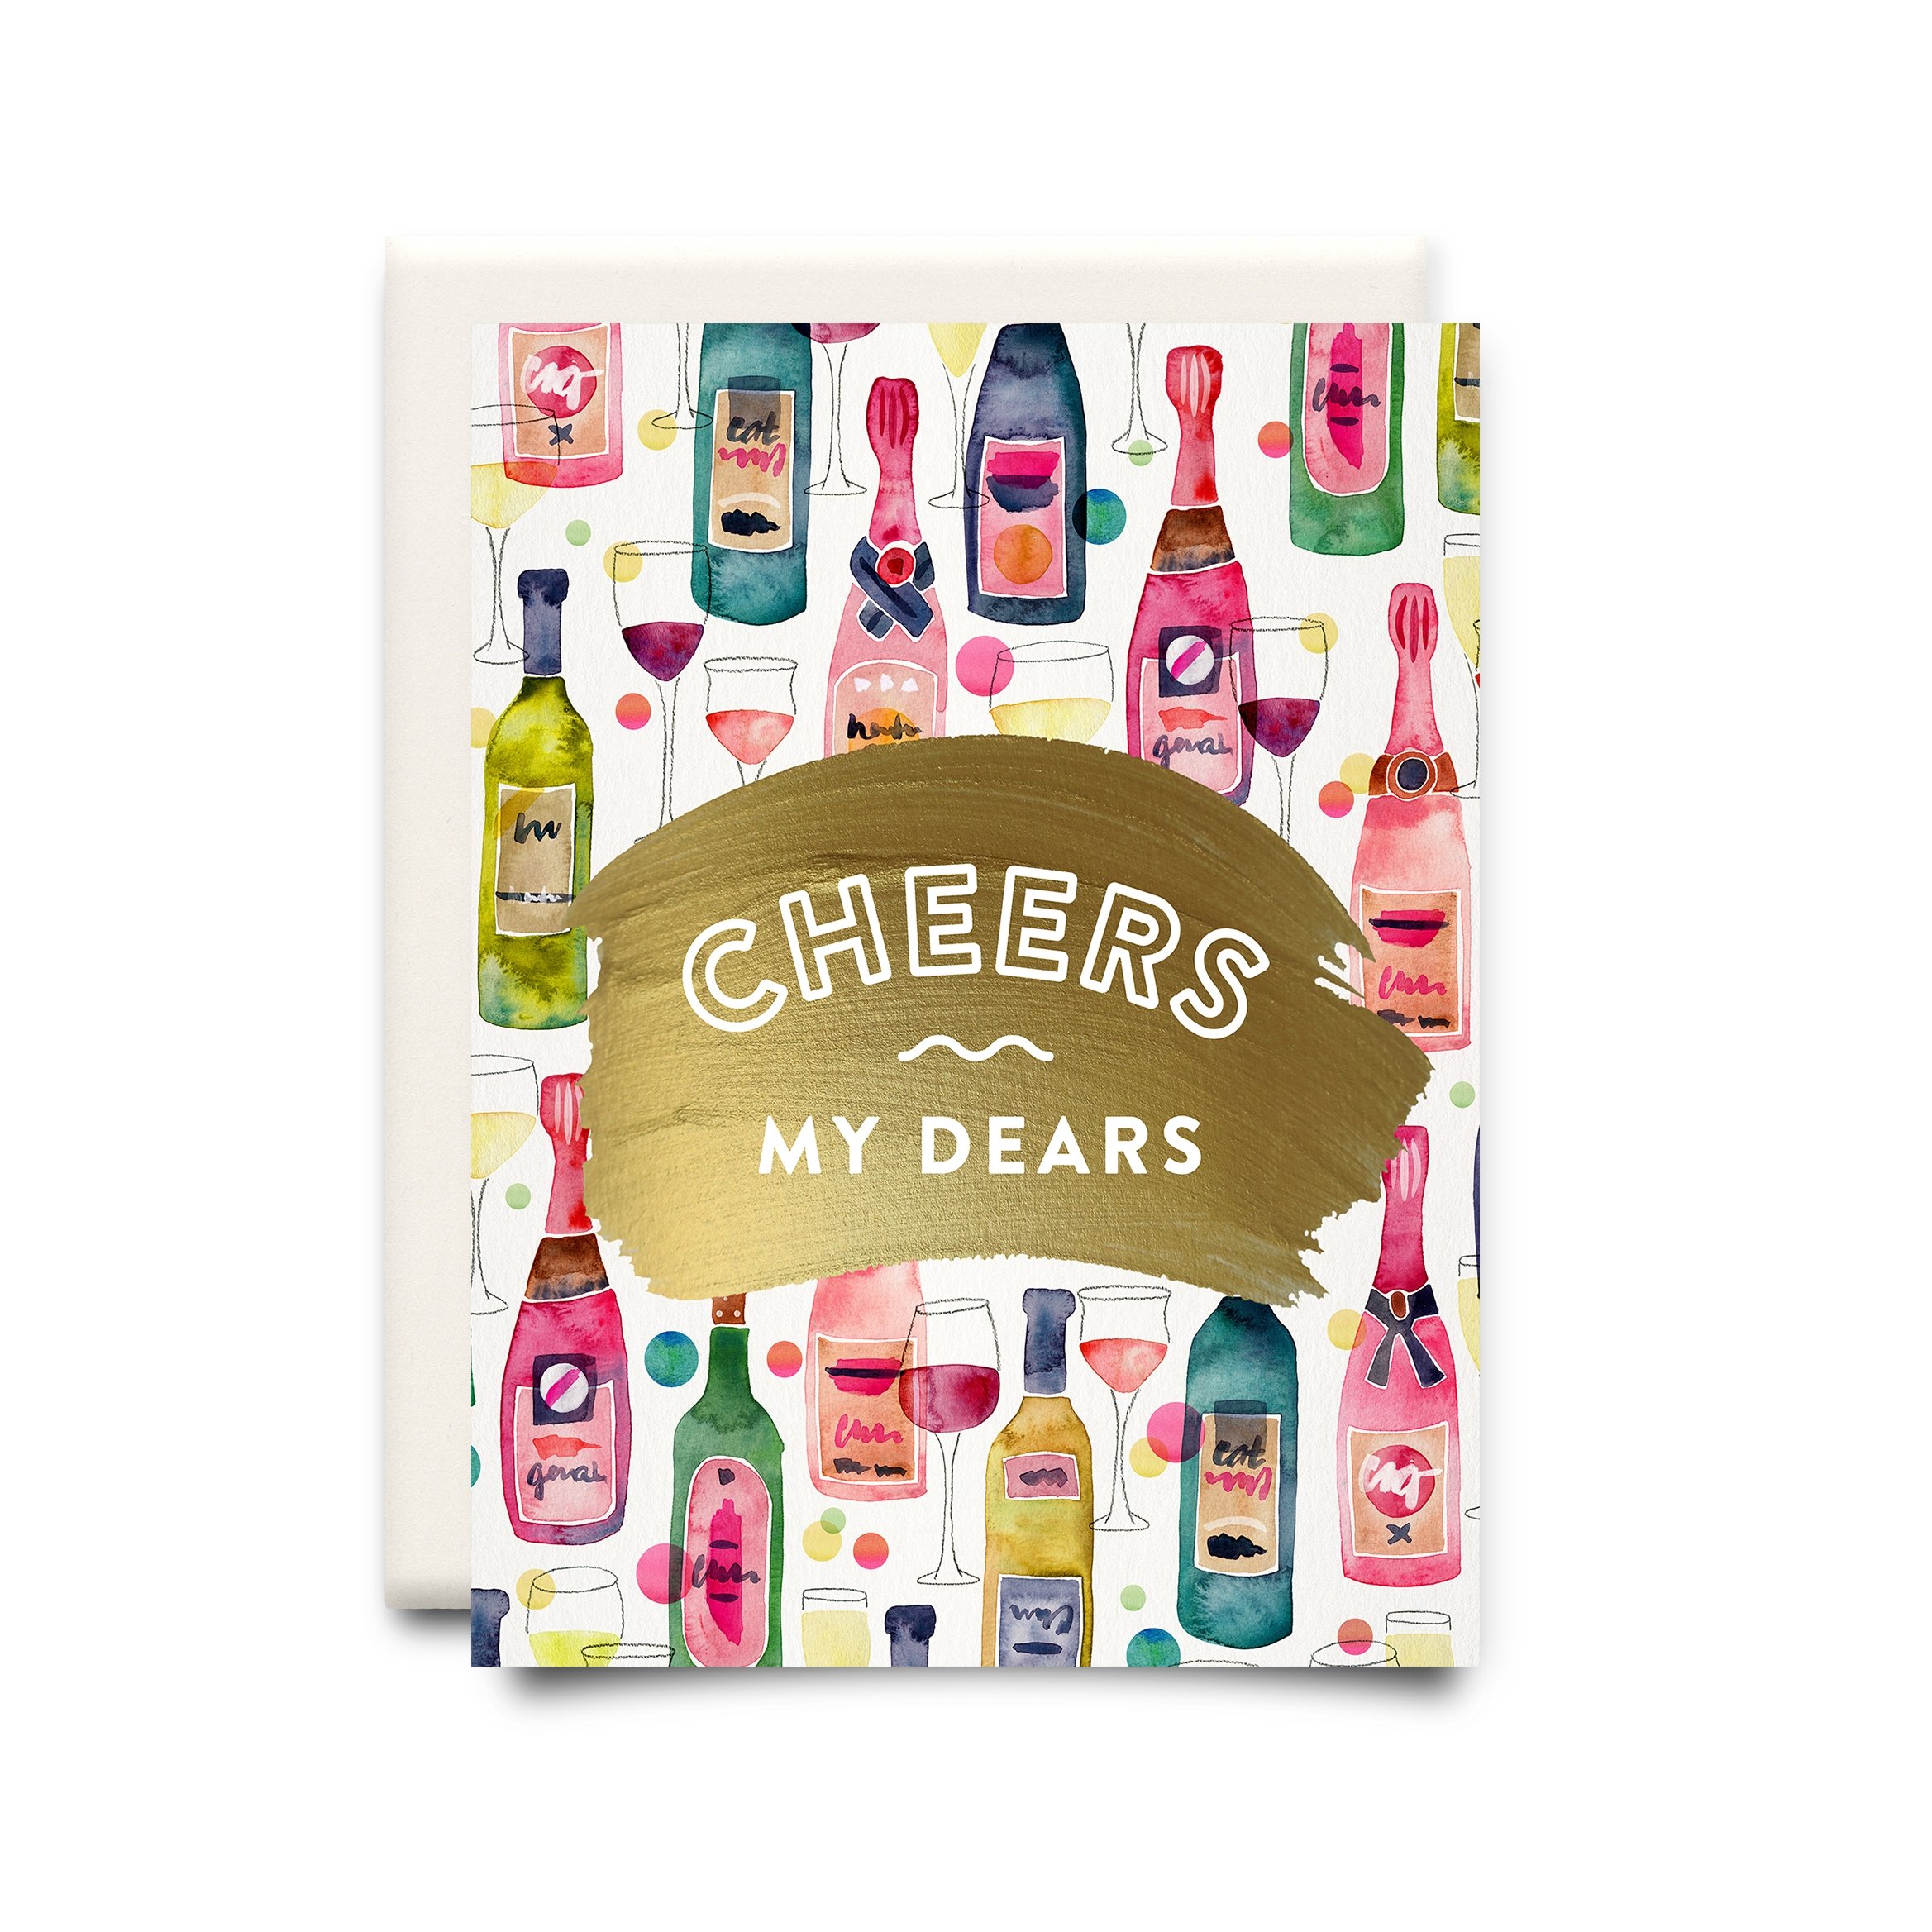 Cheers My Dears | Friendship Greeting Card.jpeg